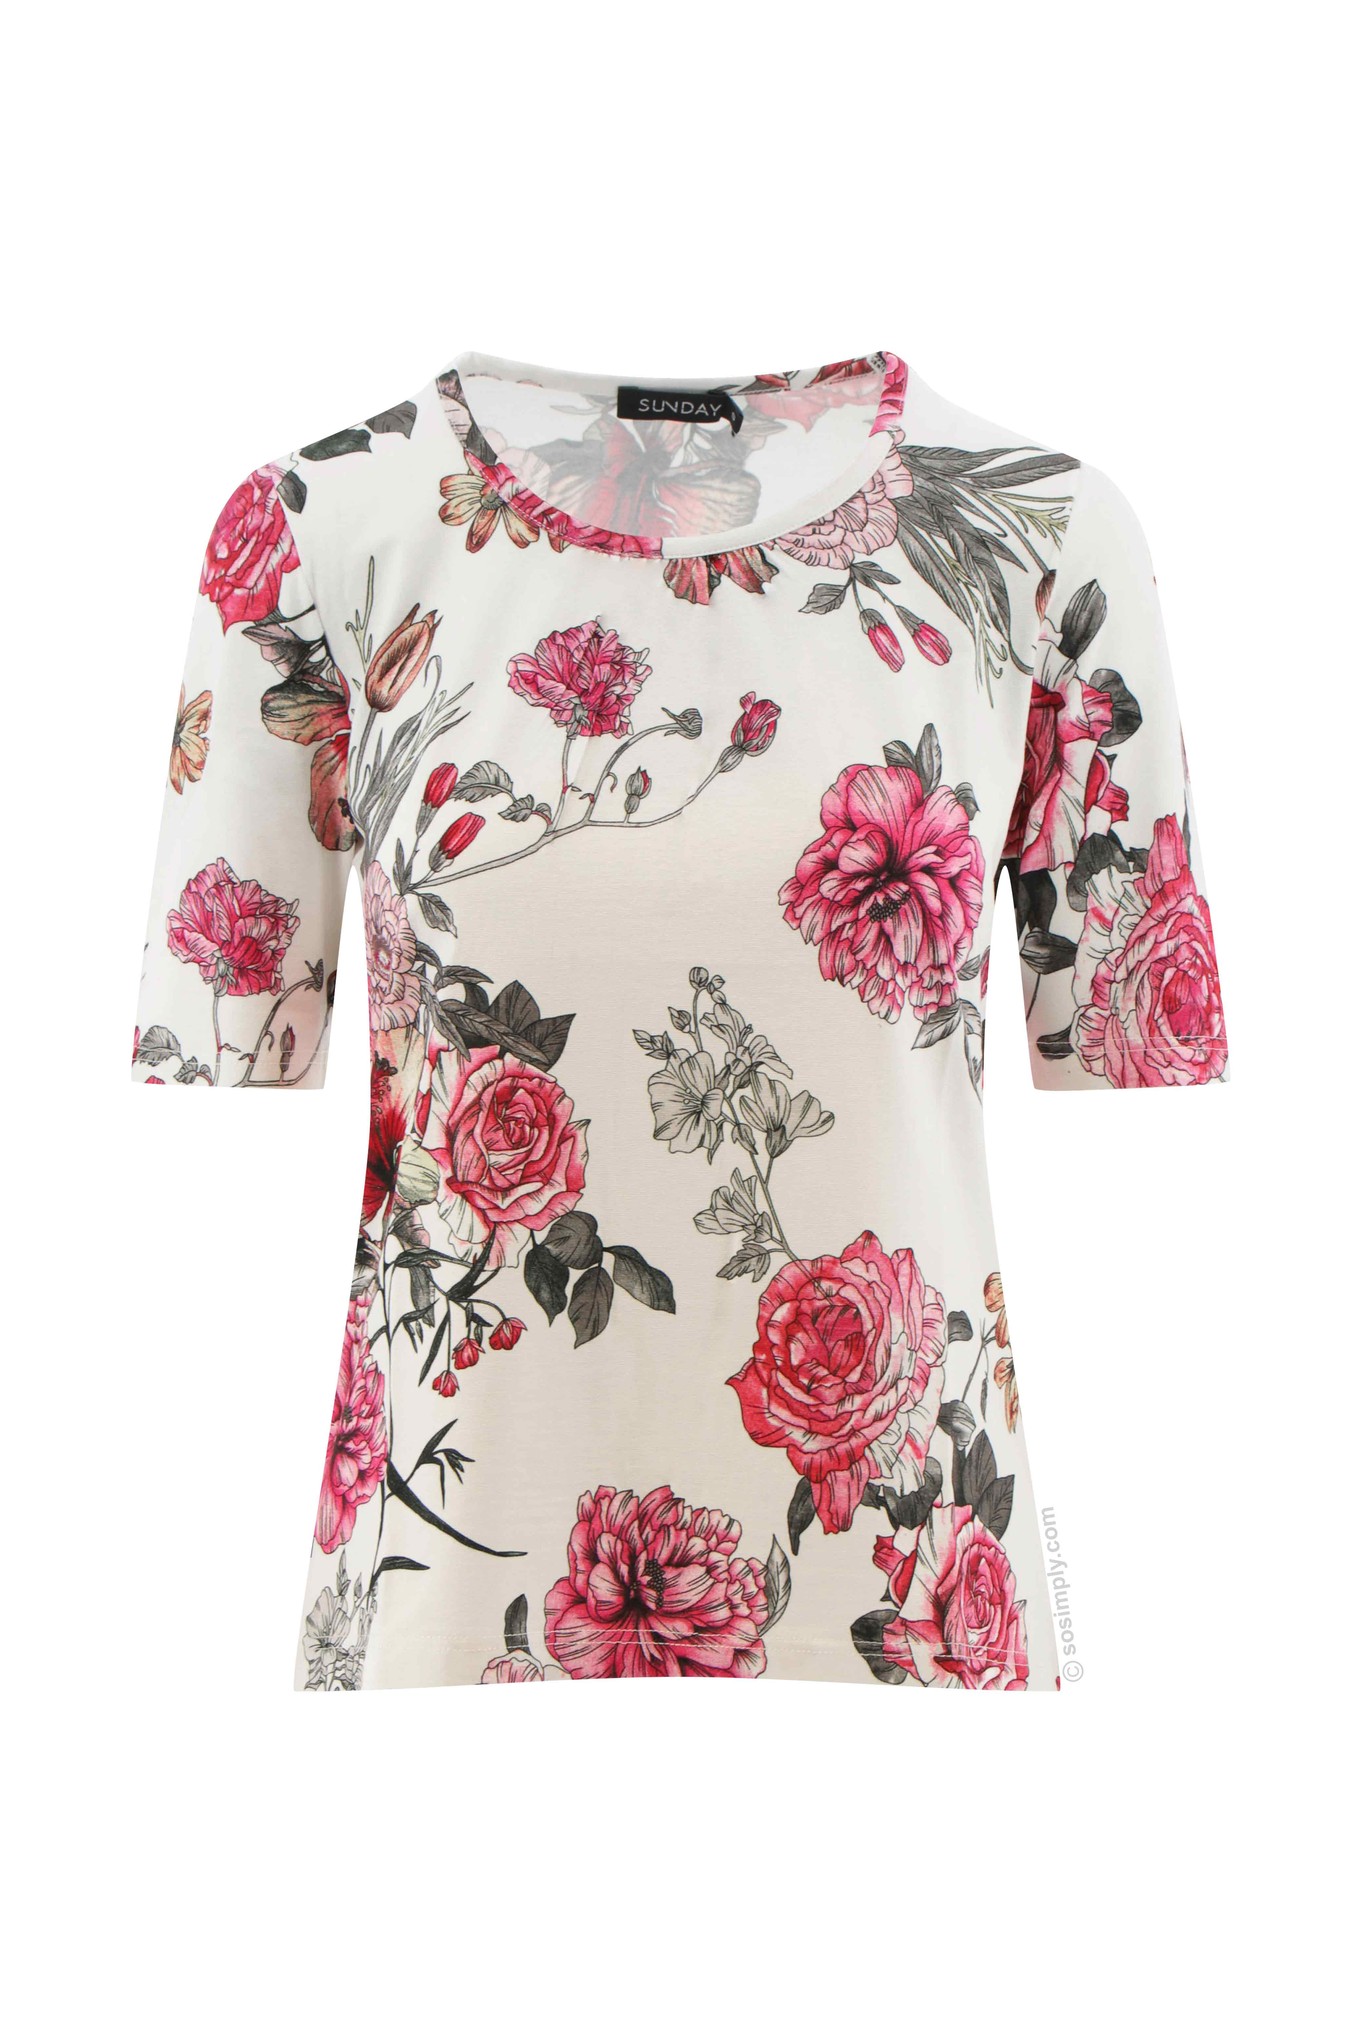 Sunday Darcy Rose Flower T Shirt